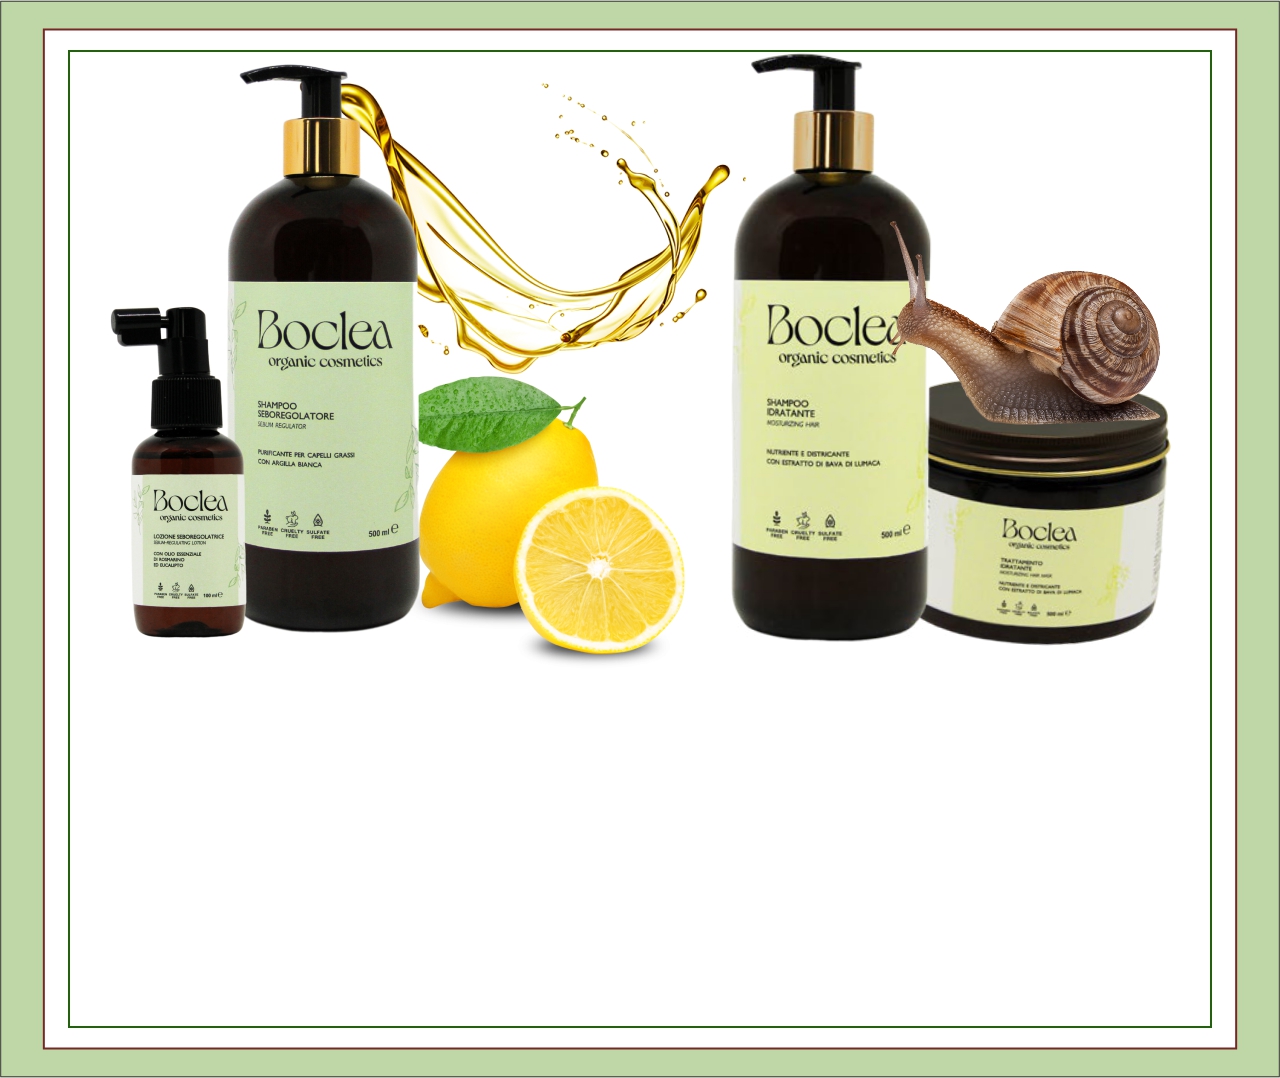 Vendita online Boclea Organic Cosmetics Botè Salon Shop